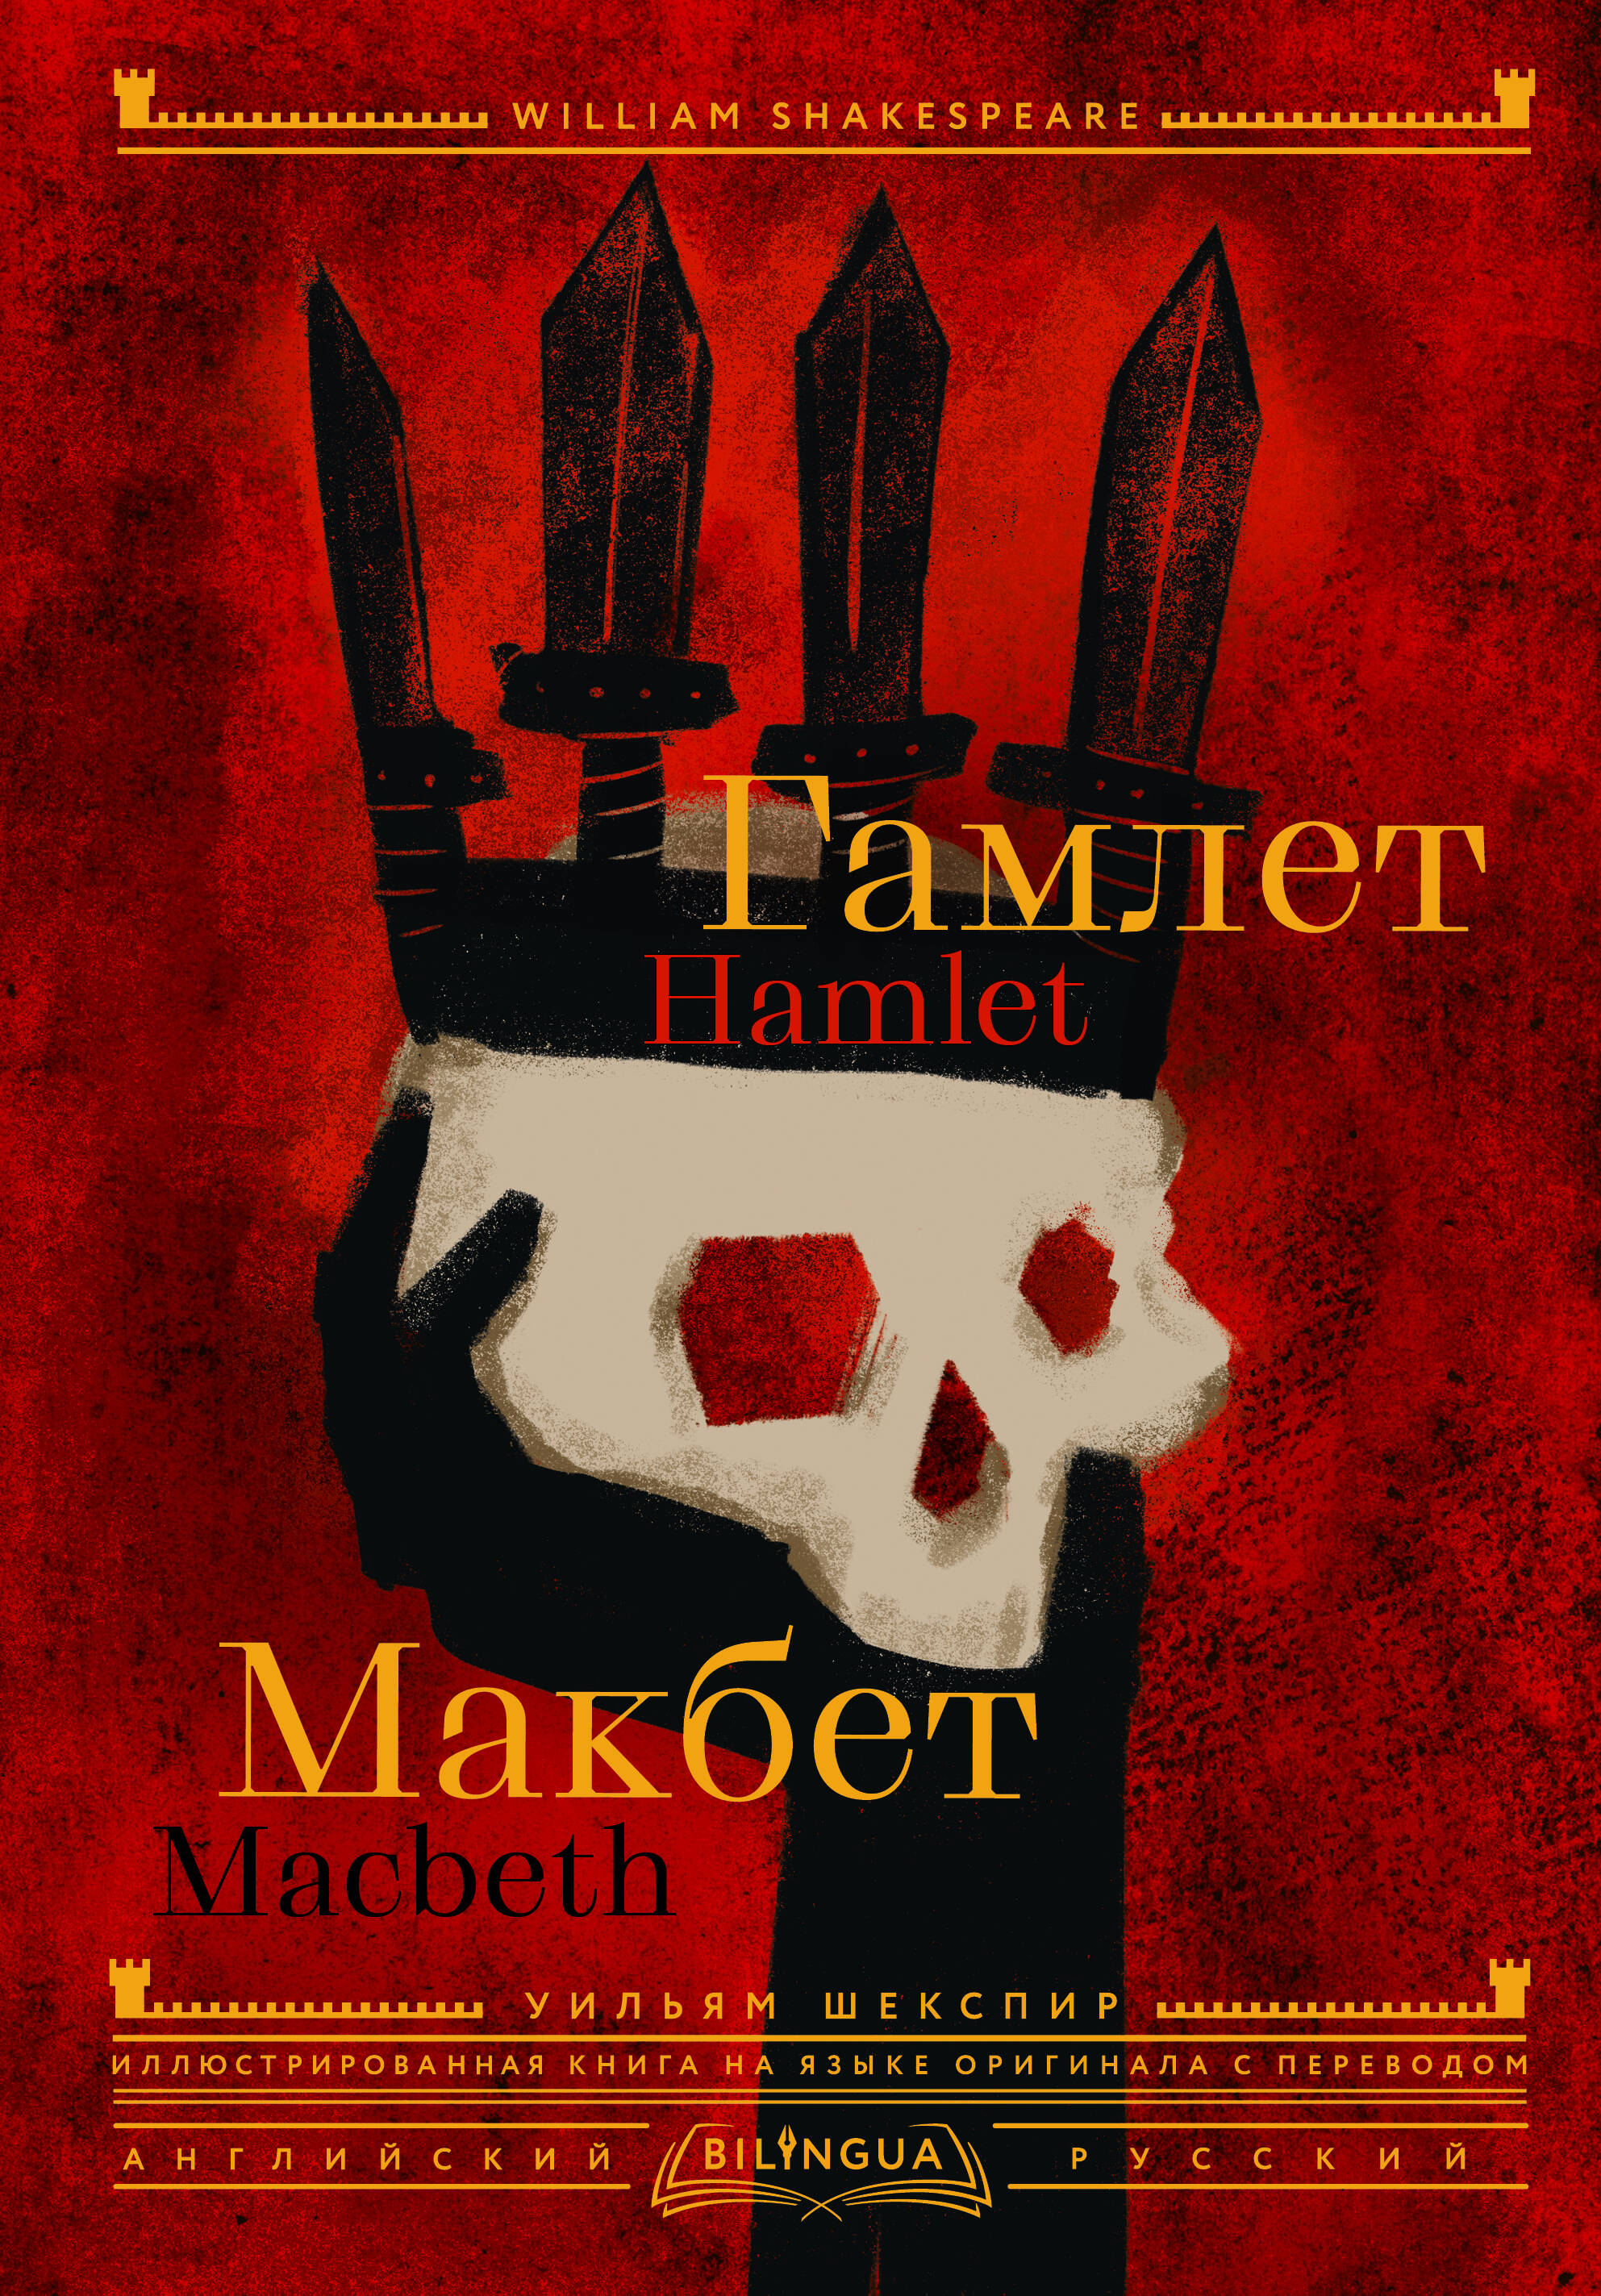 шекспир уильям hamlet teachers edition книга для учителя Шекспир Уильям Гамлет. Макбет = Hamlet. Macbeth